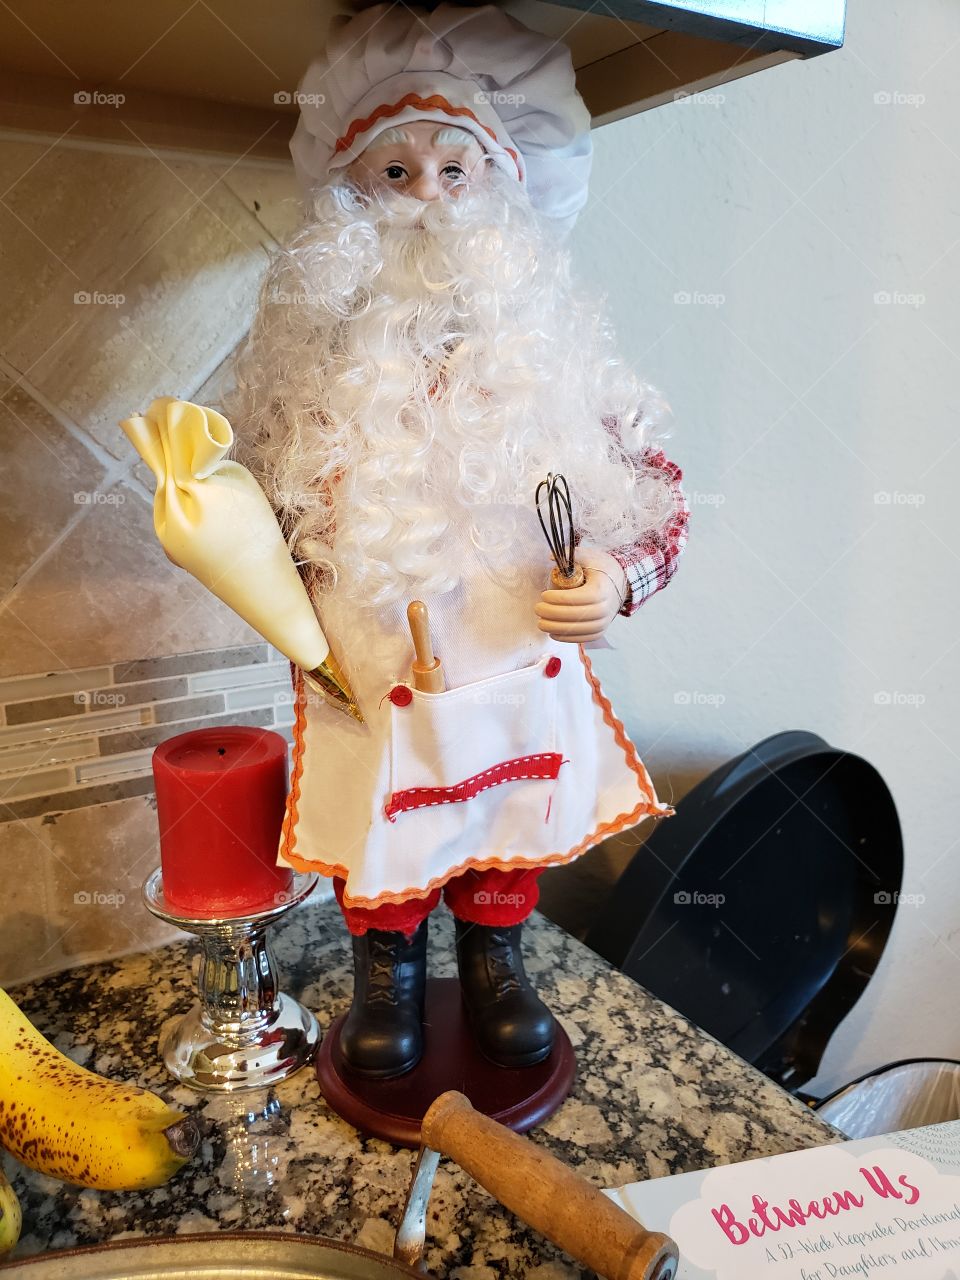 Baker Santa Claus